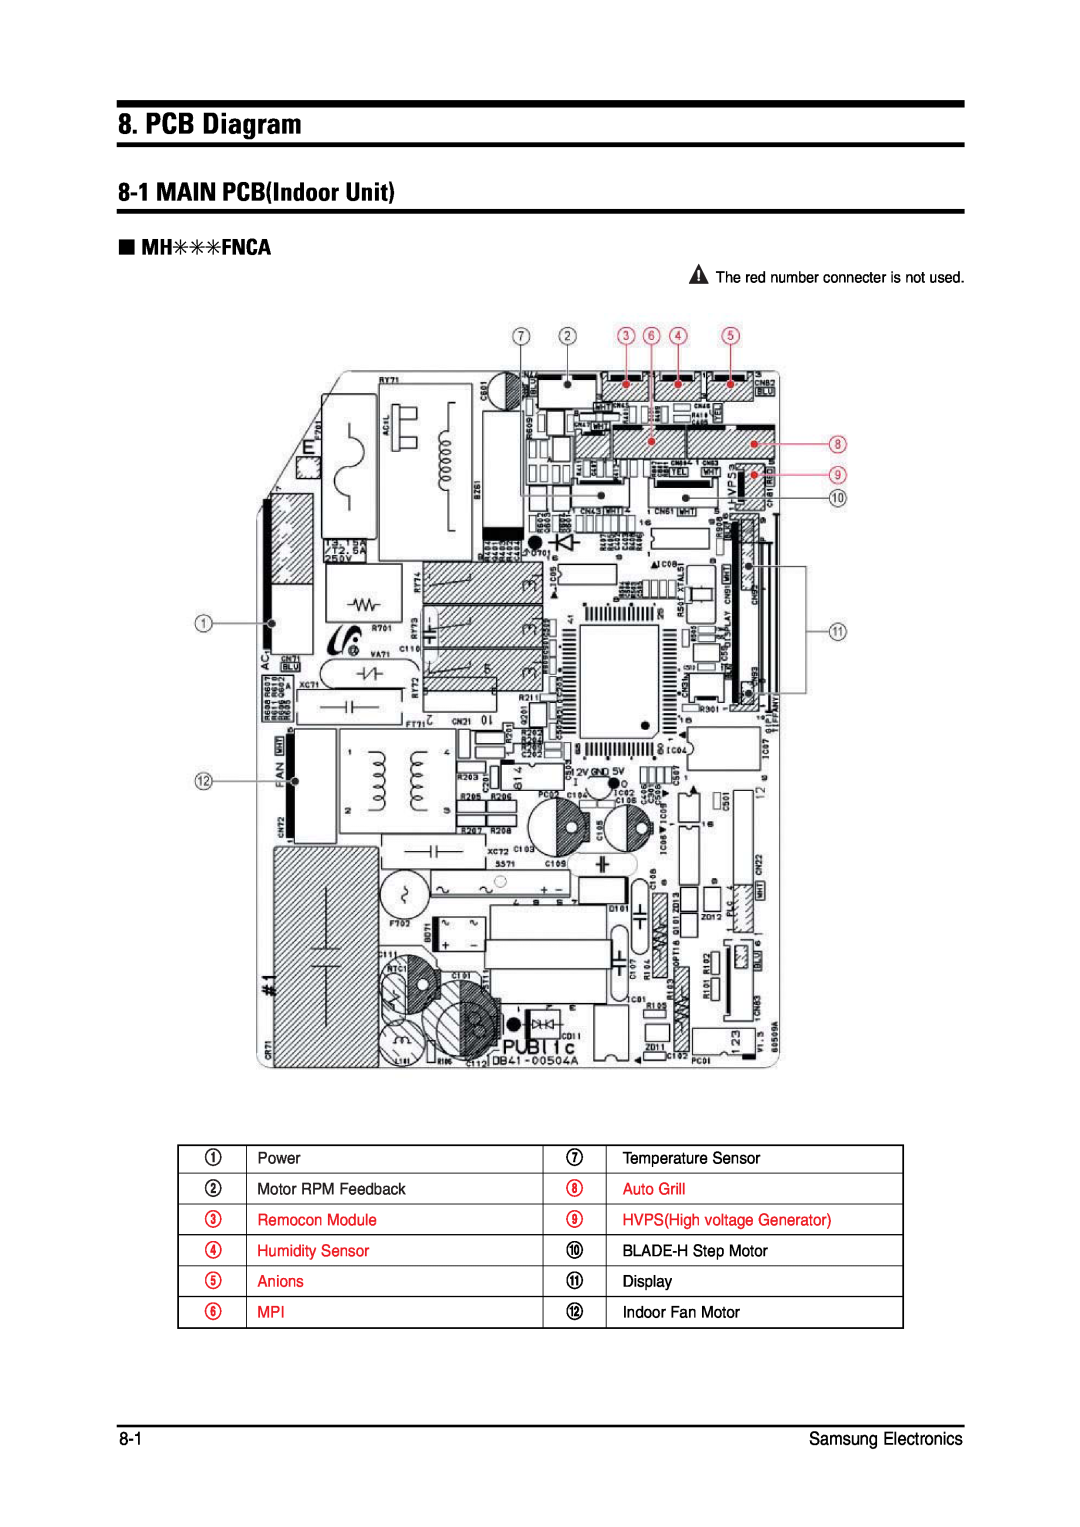 Samsung MH026FNCA service manual PCB Diagram, 8-1MAIN PCBIndoor Unit, Mhfnca 